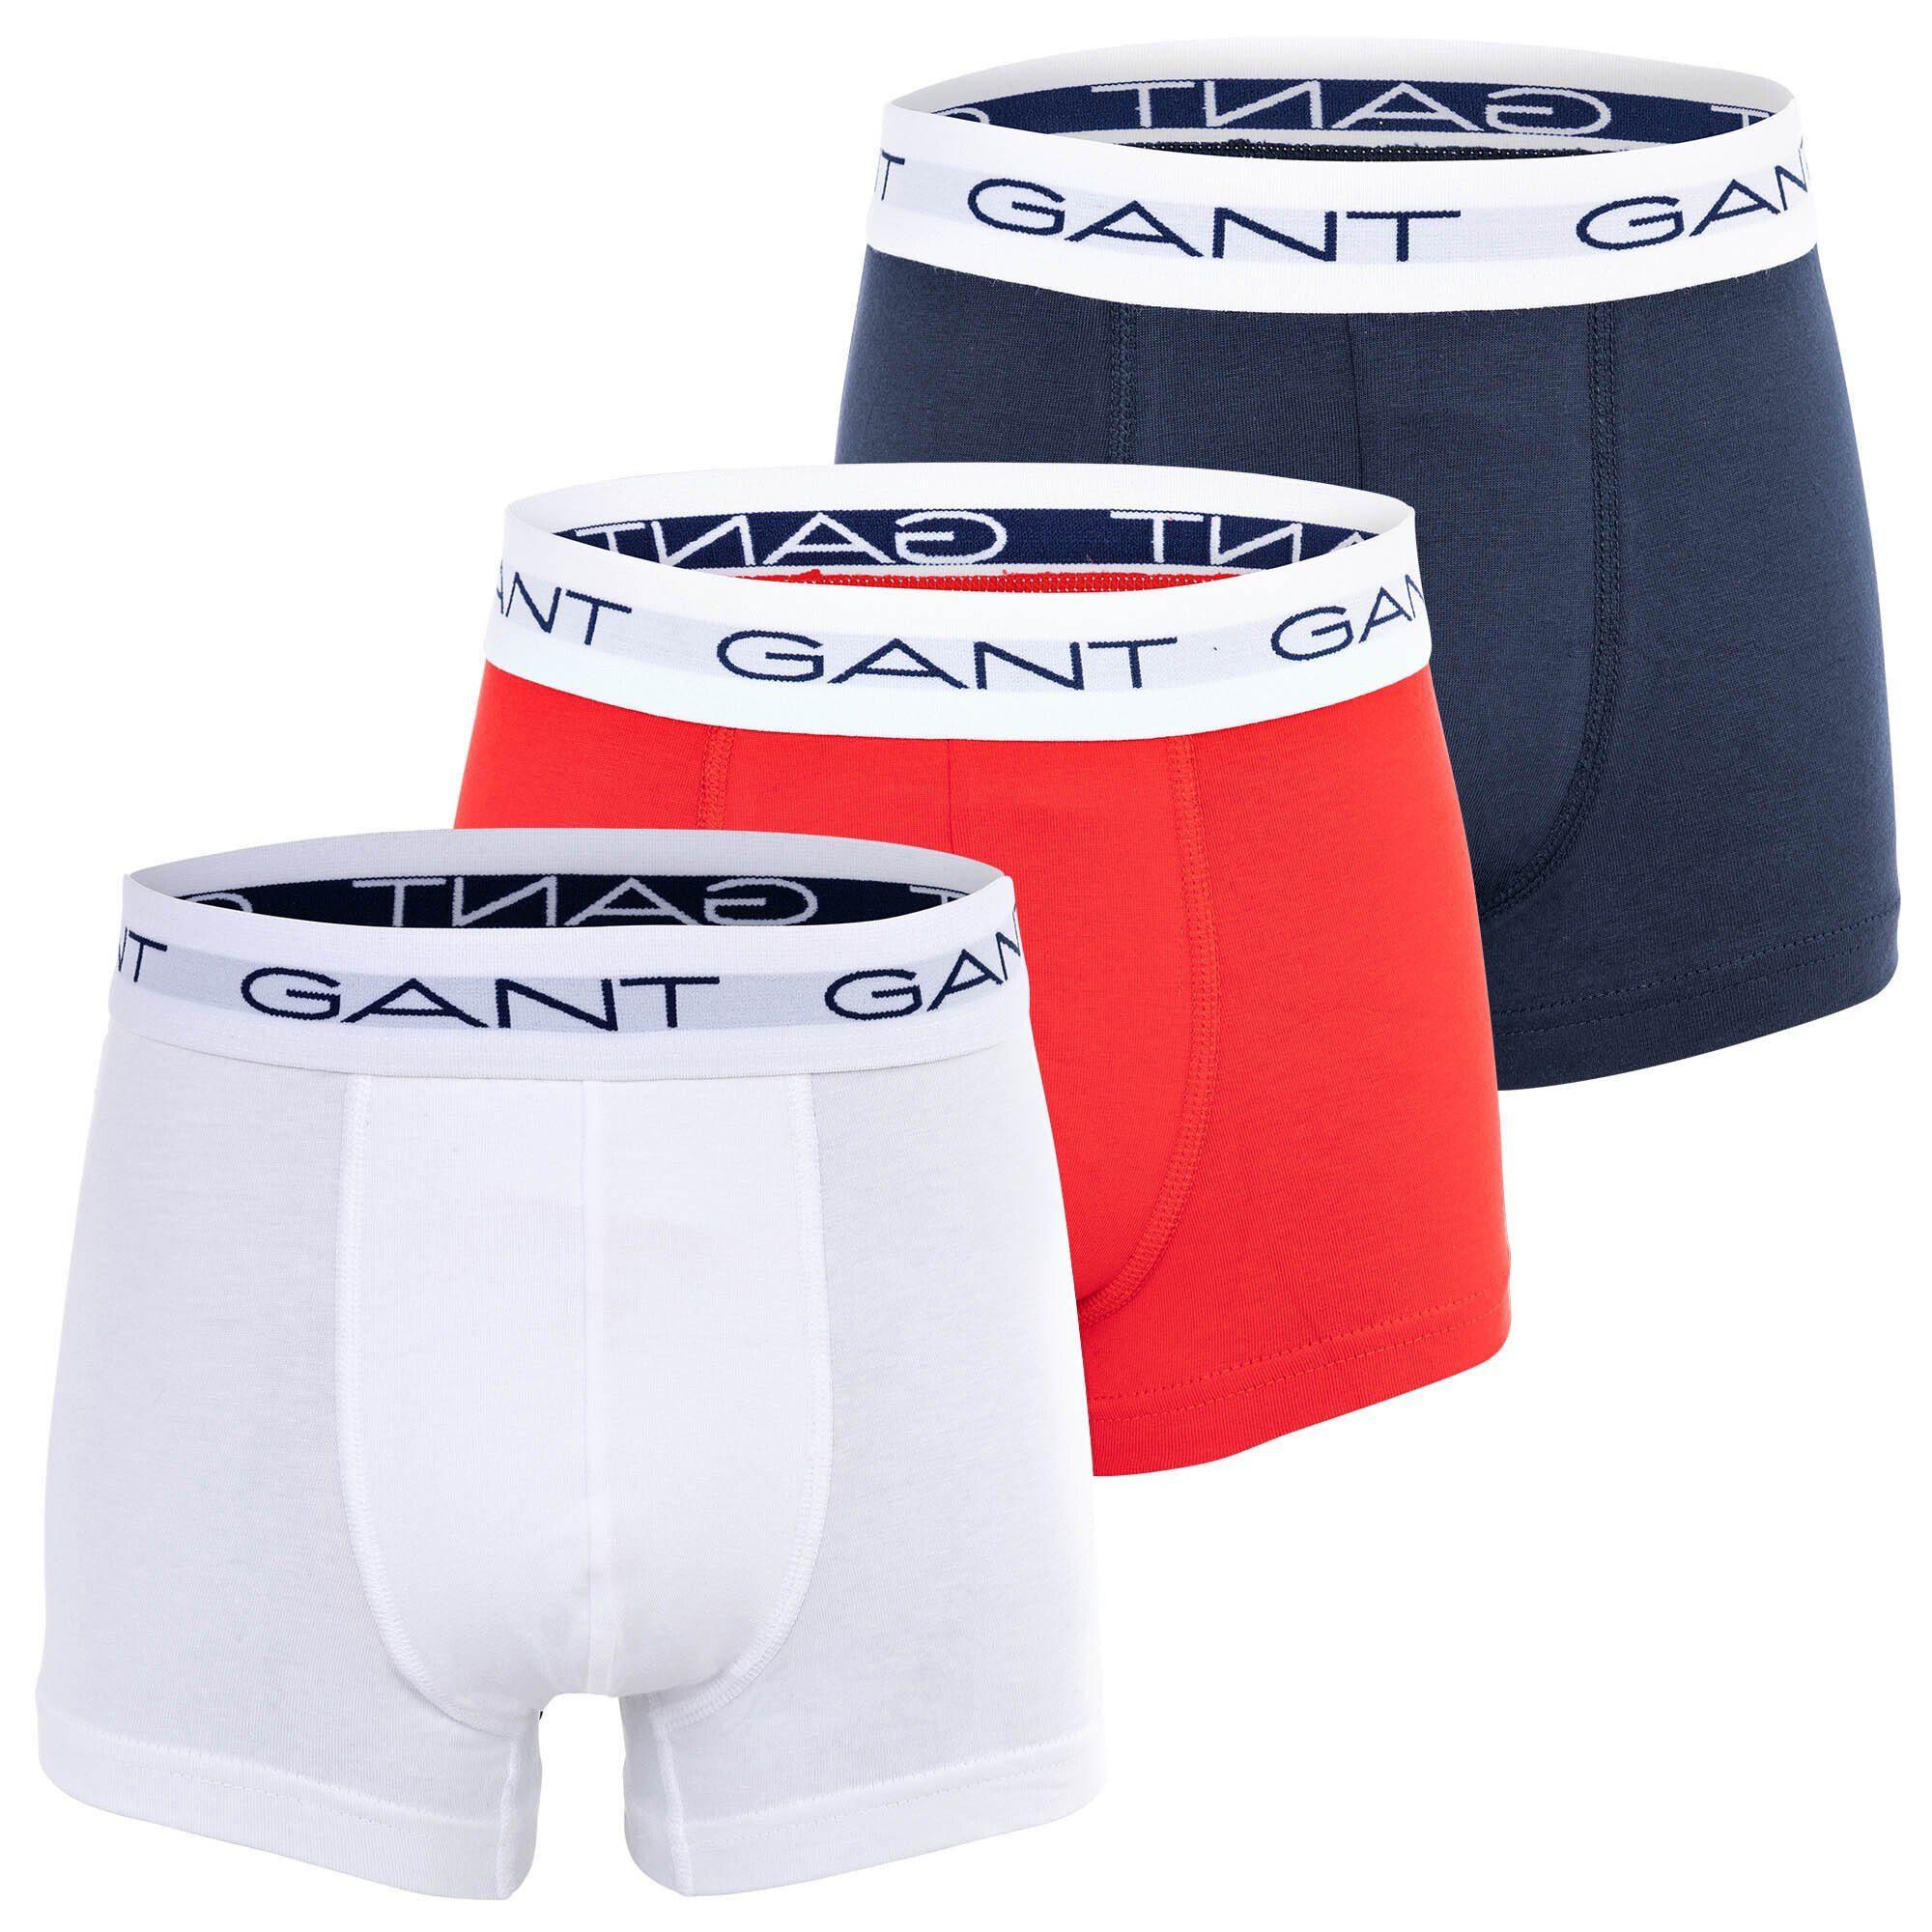 Gant Boxer Jungen Boxer Shorts, 3er Pack - Trunks, Cotton Mehrfarbig